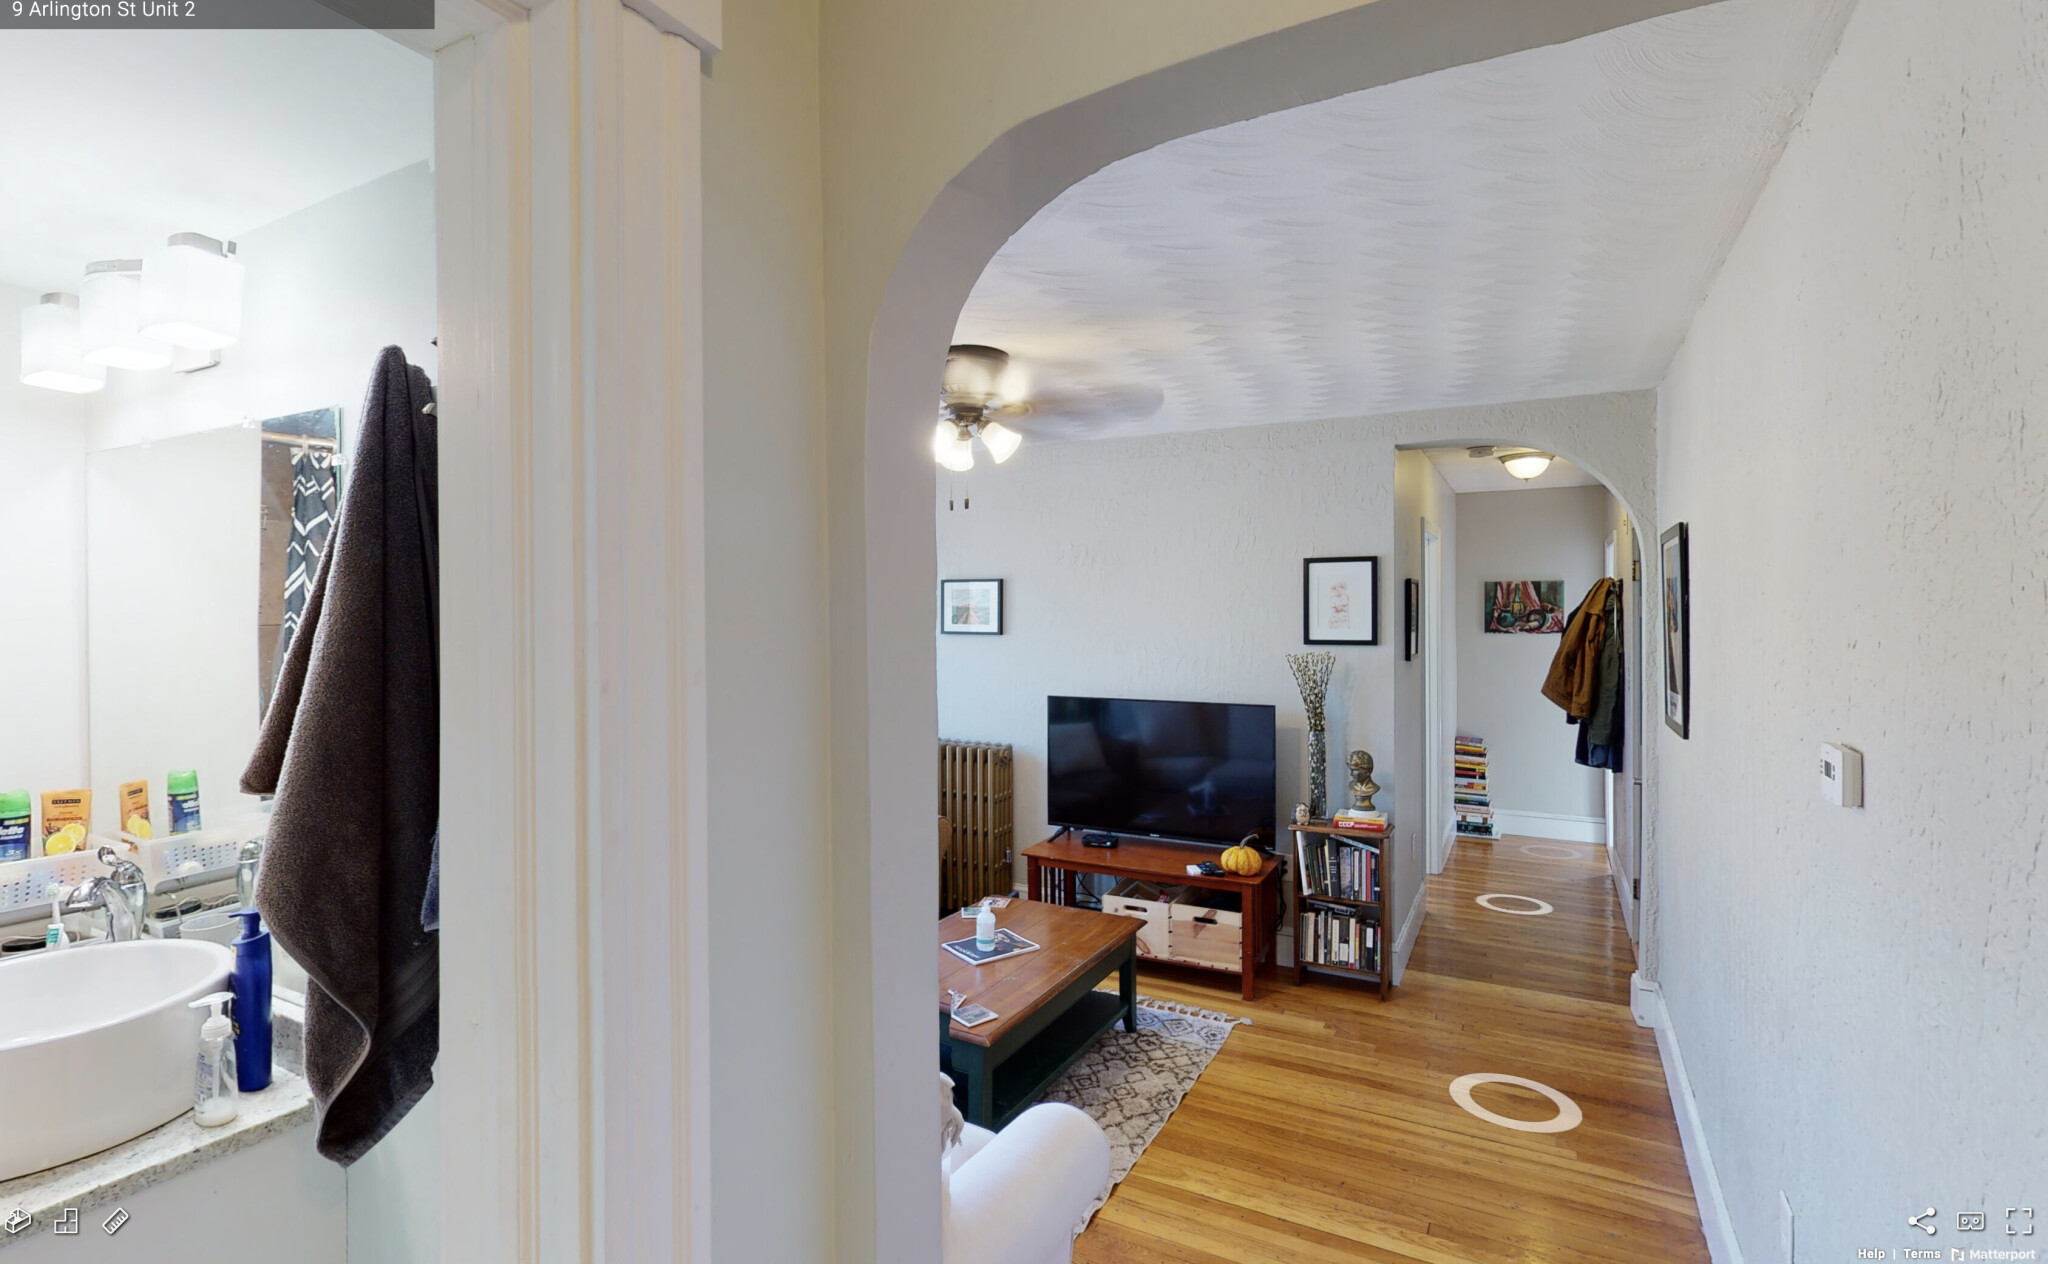 Photos of apartment on Arlington St.,Somerville MA 02145